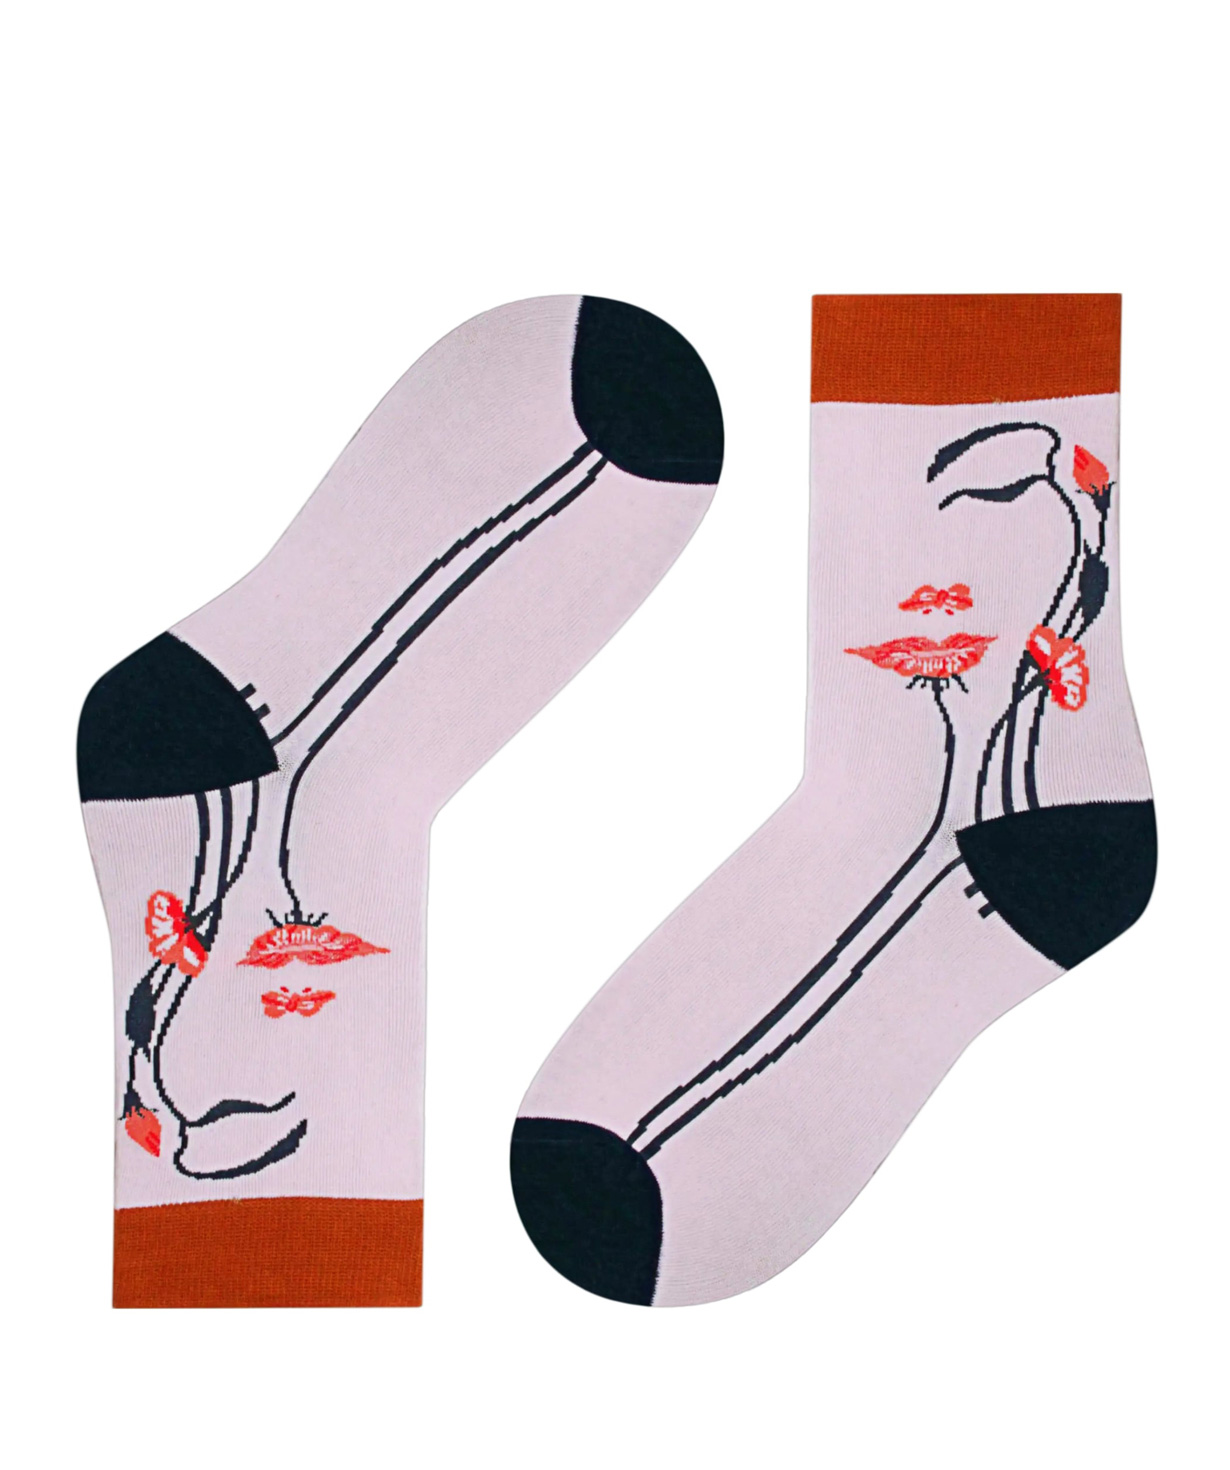 Socks `Zeal Socks` feminine features